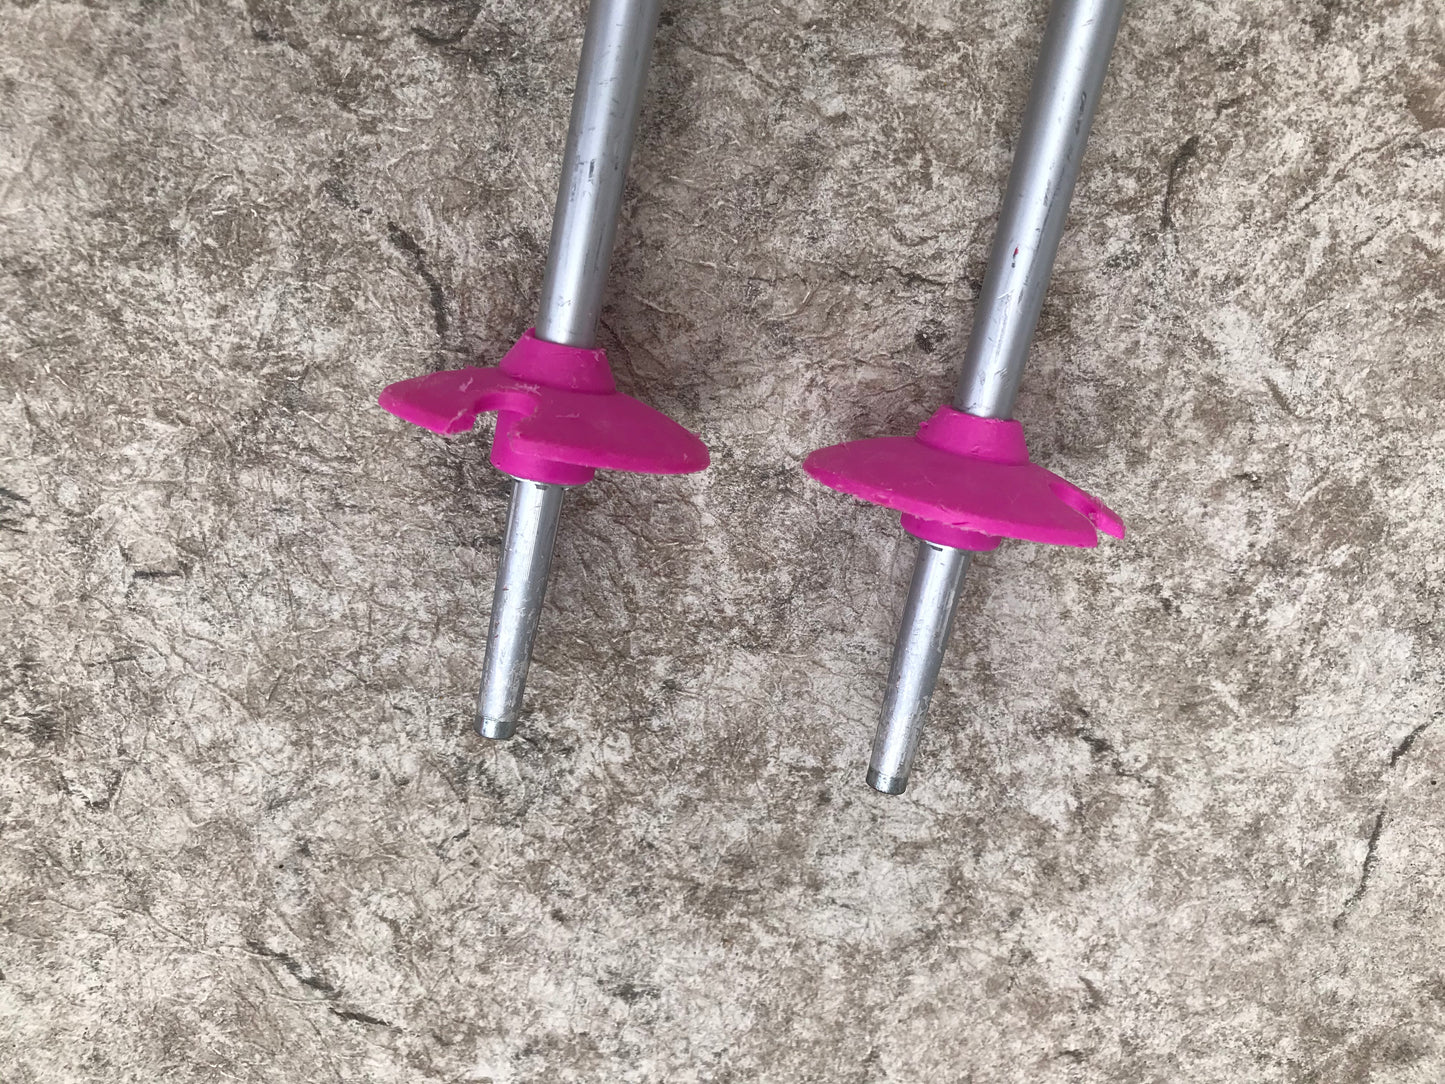 Ski Poles Child Size 40 inch K-2 Teal Fushia Pink Silver Rubber Handles As New